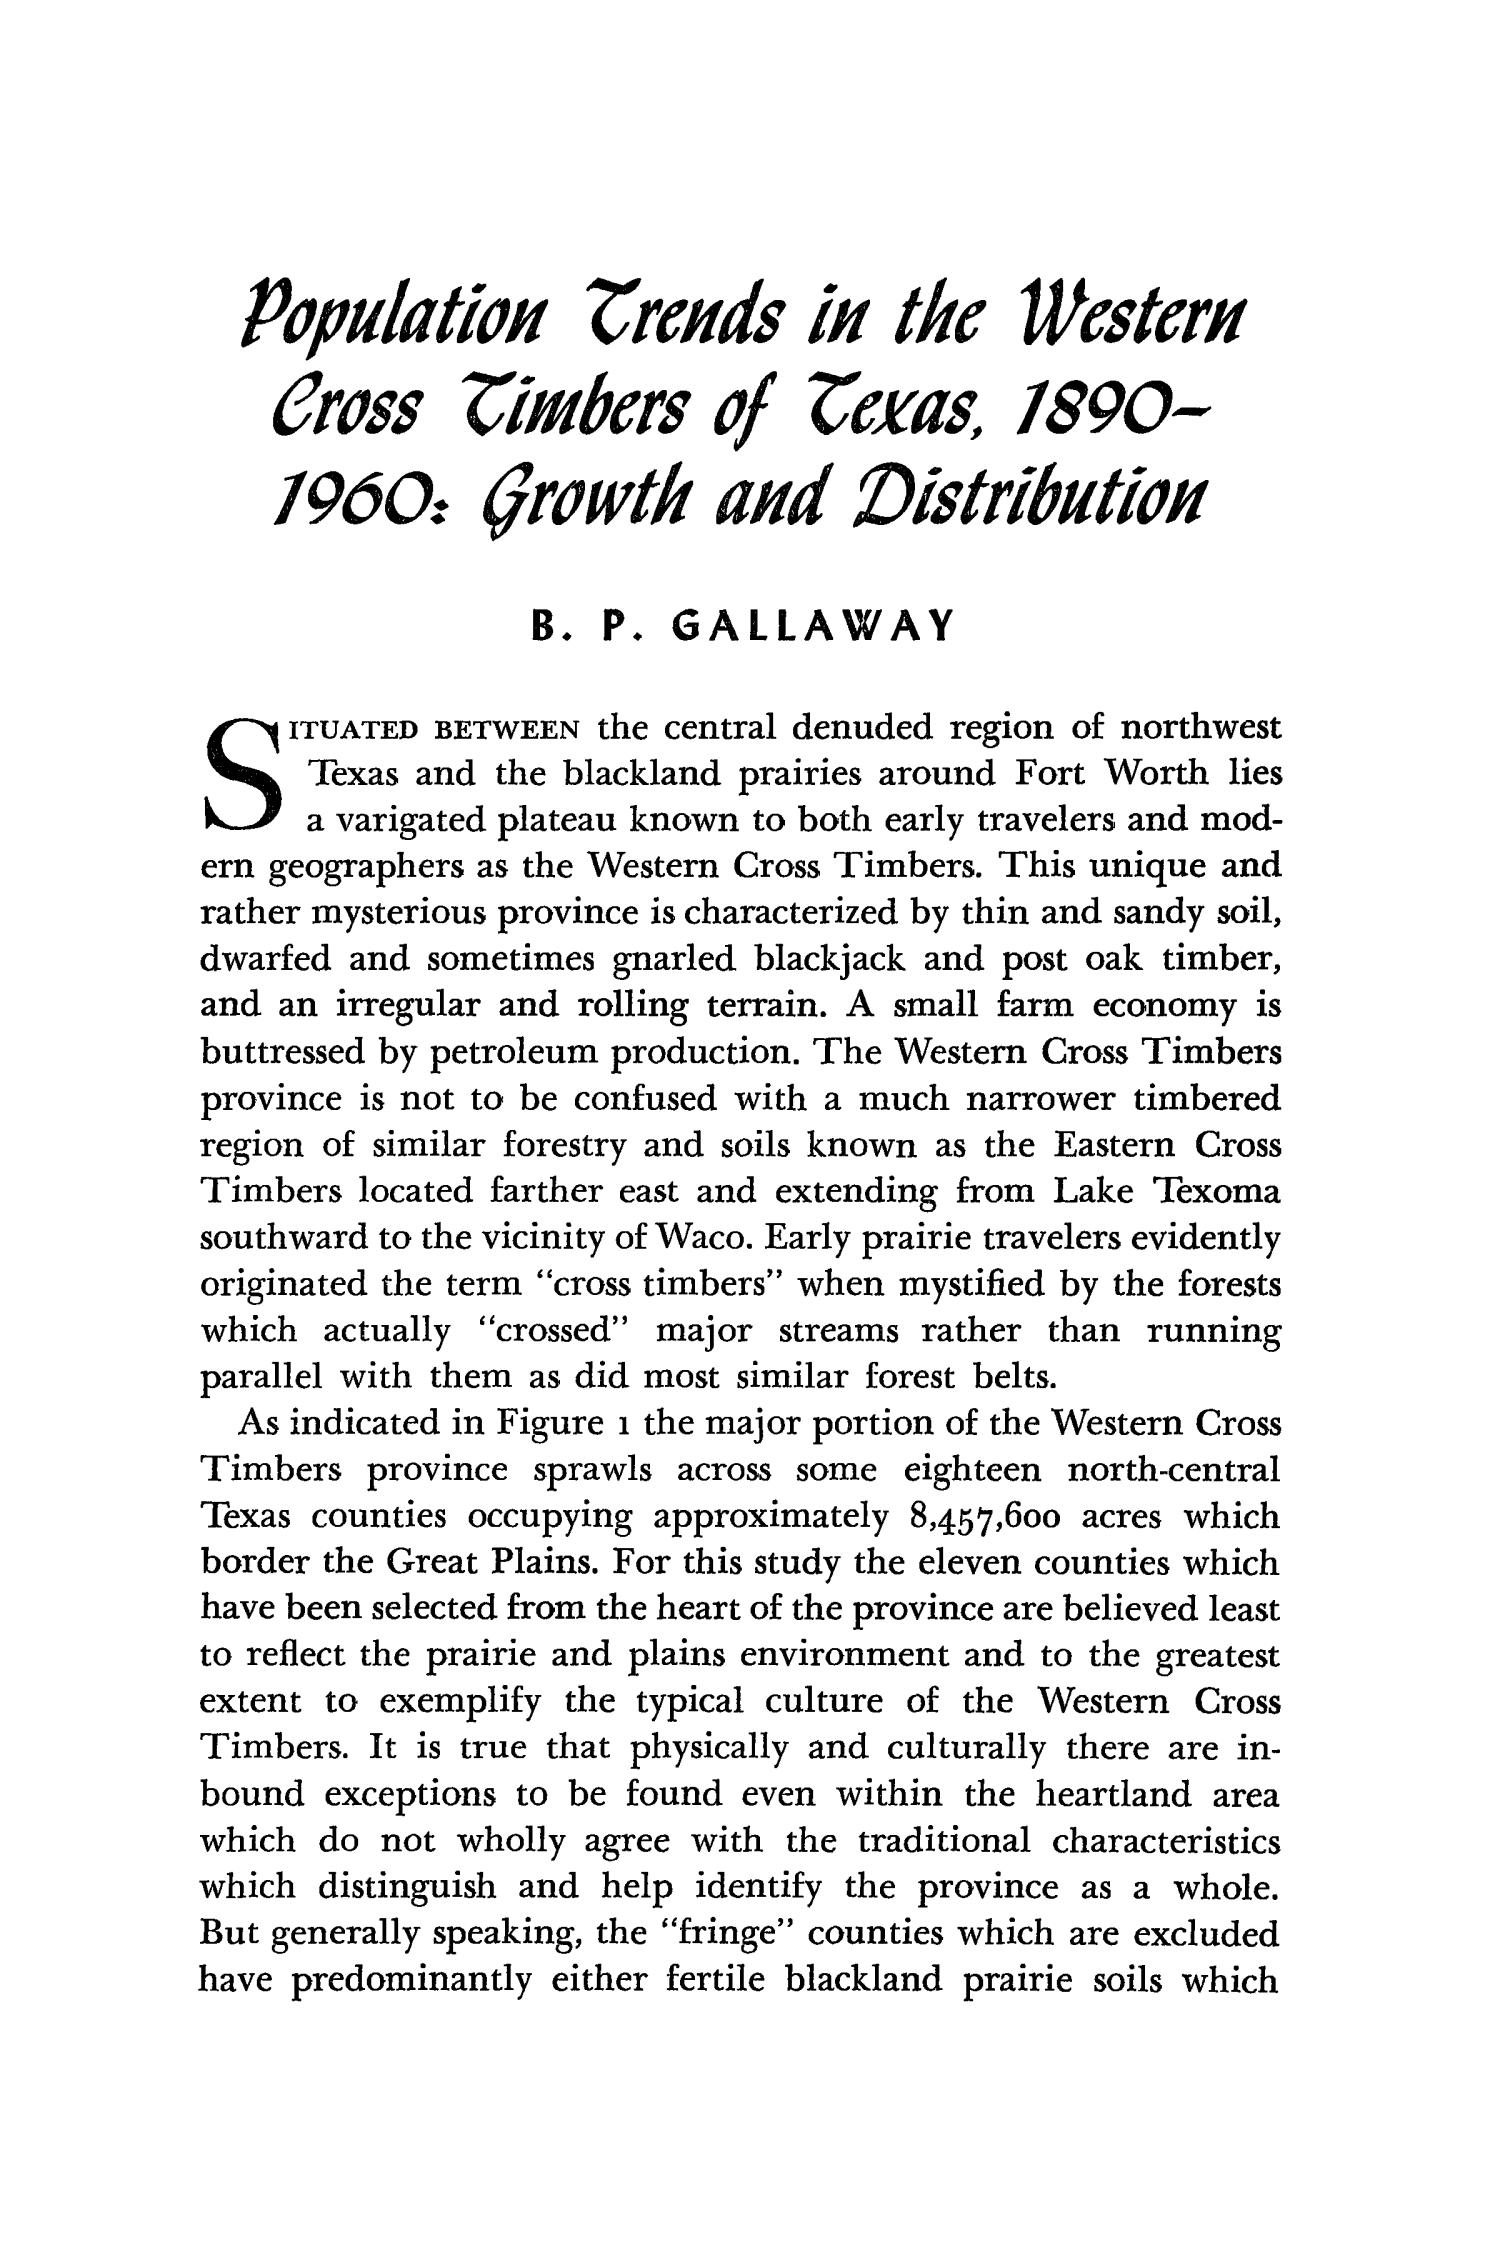 The Southwestern Historical Quarterly, Volume 65, July 1961 - April, 1962
                                                
                                                    333
                                                